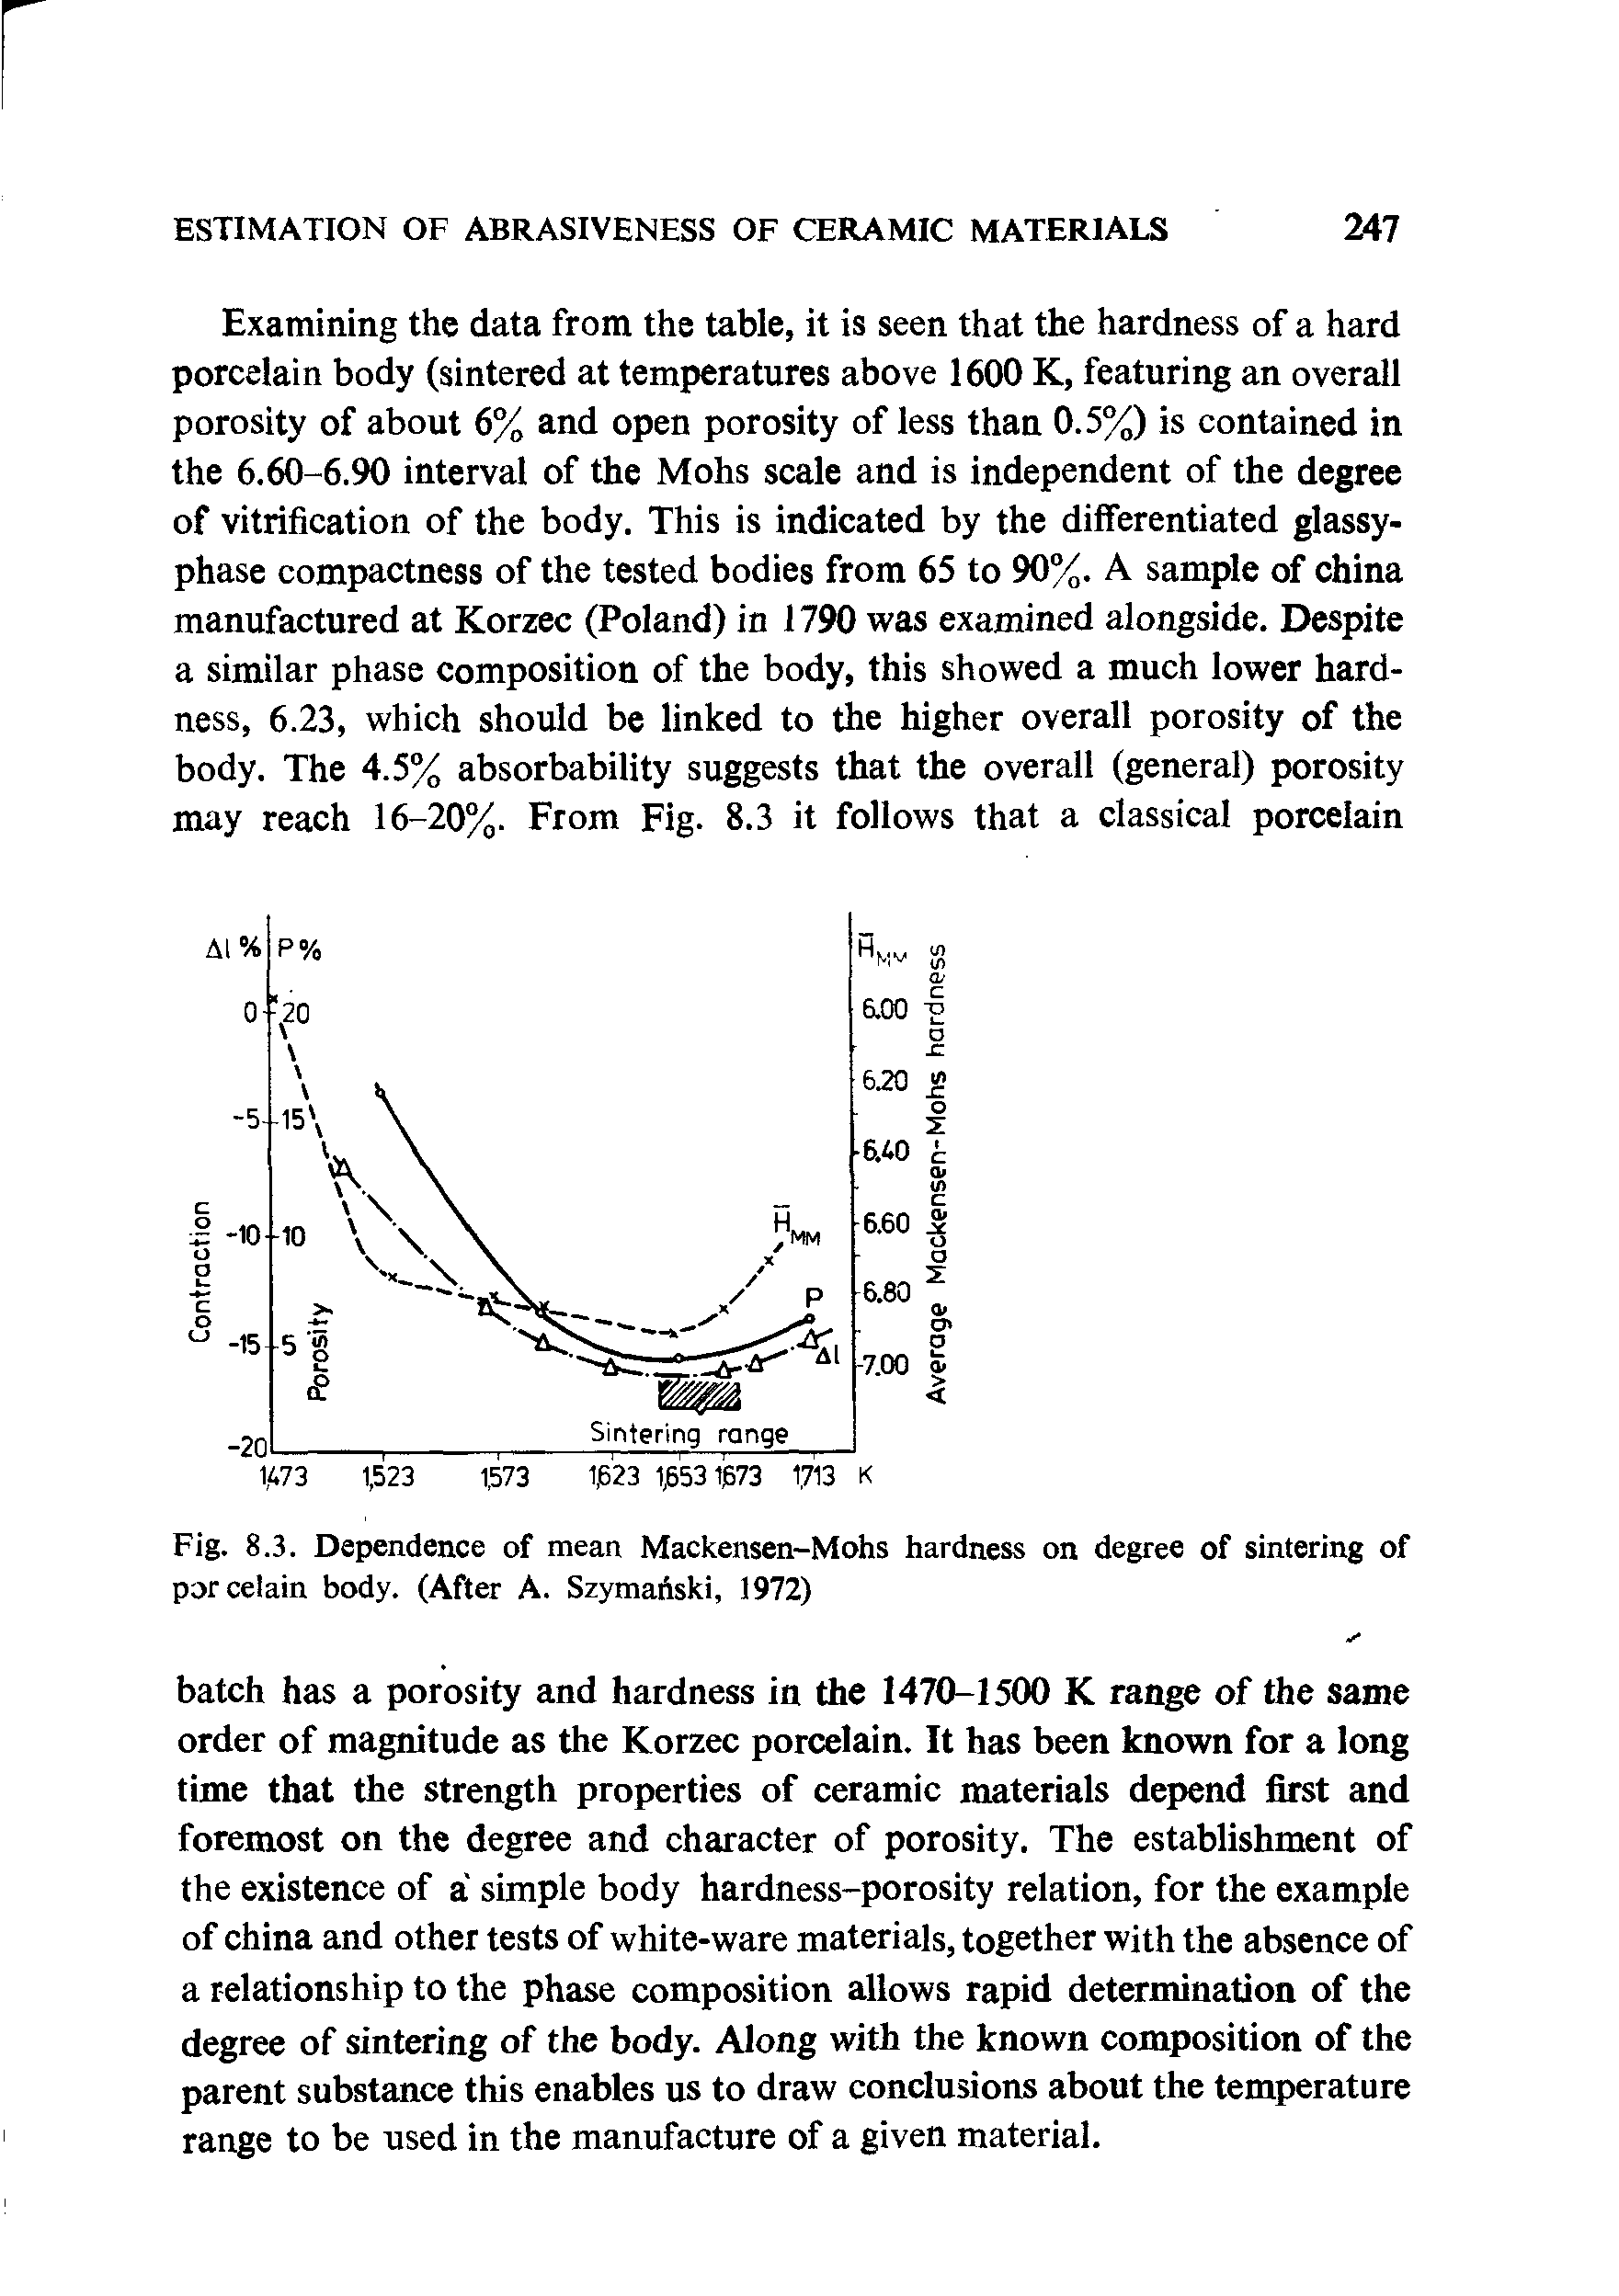 Fig. 8.3. Dependence of mean Mackensen-Mohs hardness on degree of sintering of porcelain body. (After A. Szymanski, 1972)...